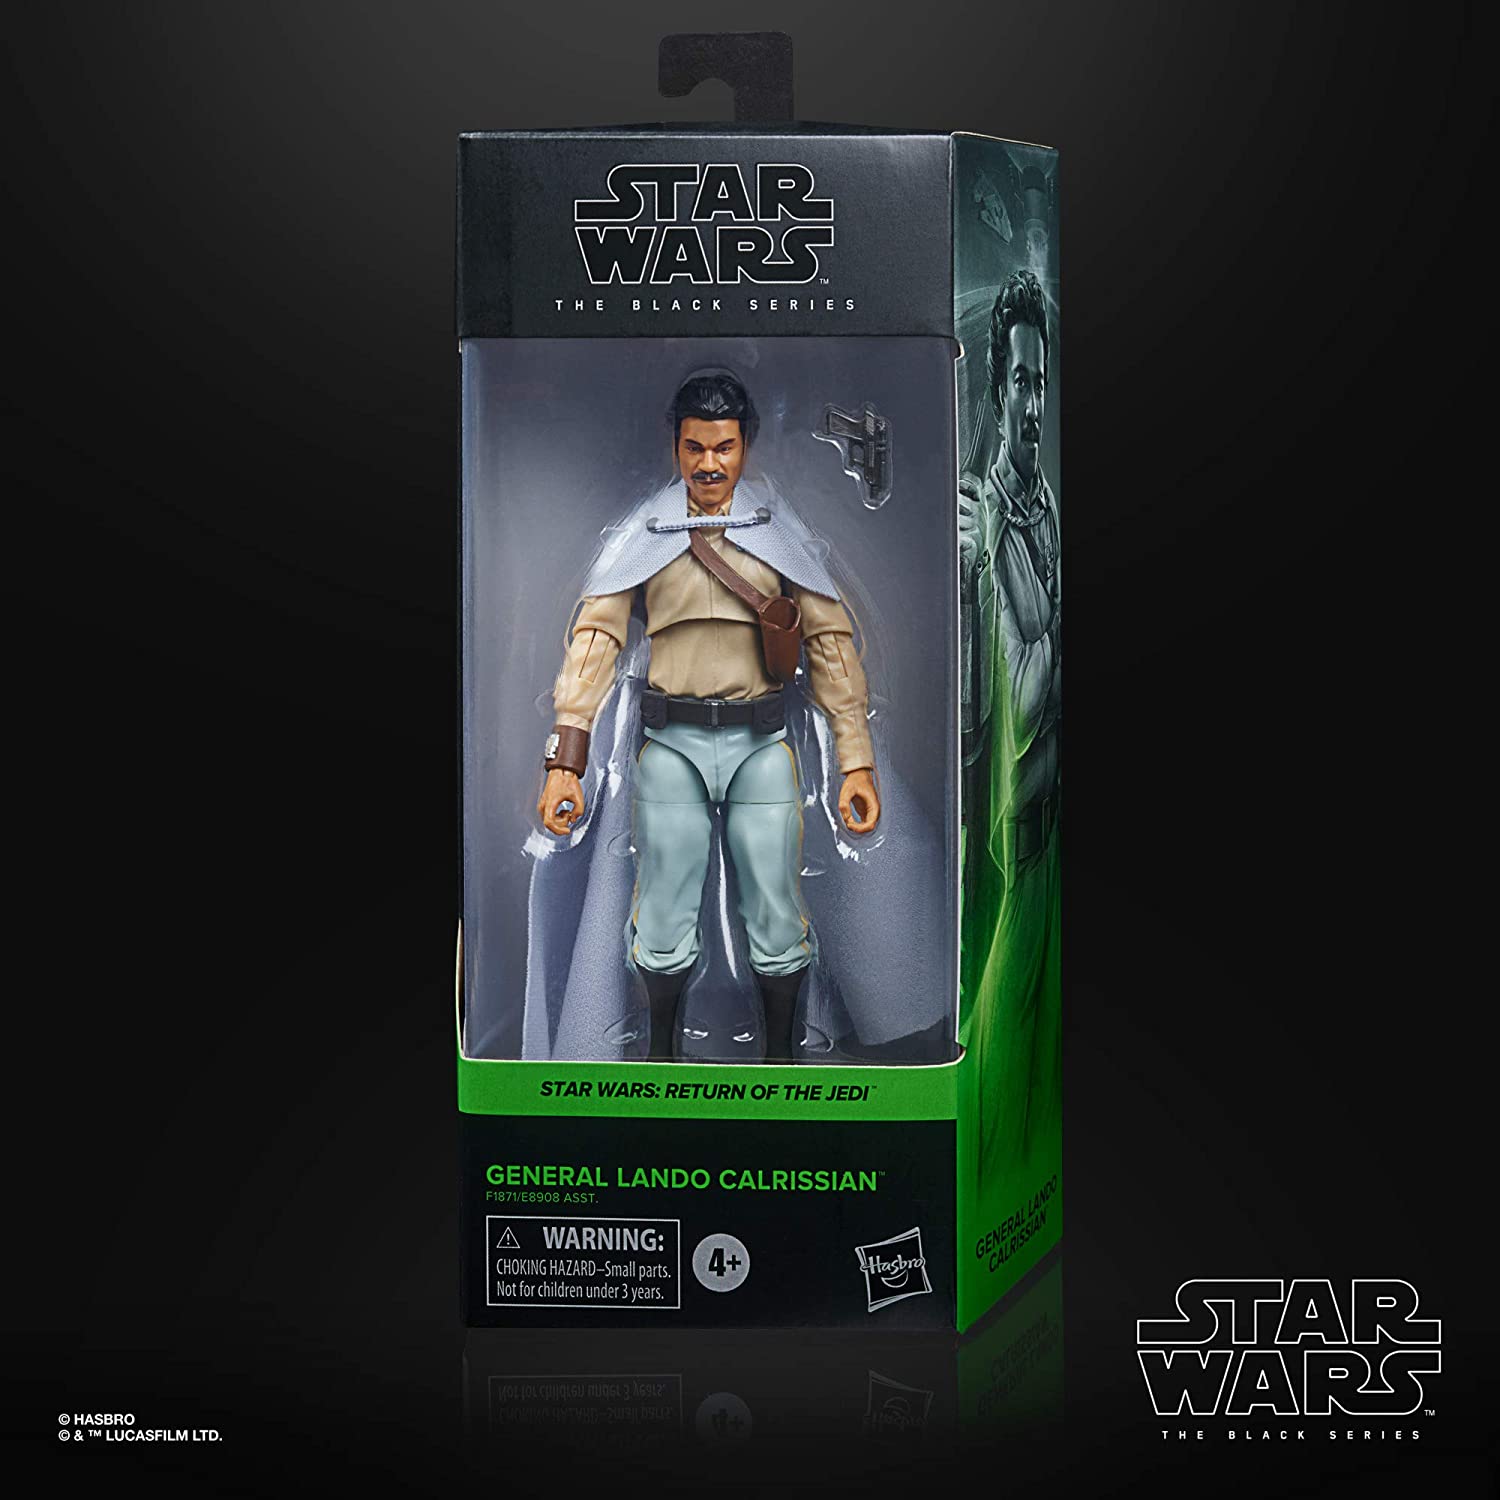 Star Wars The Black Series General Lando Calrissian 15 cm große Figur